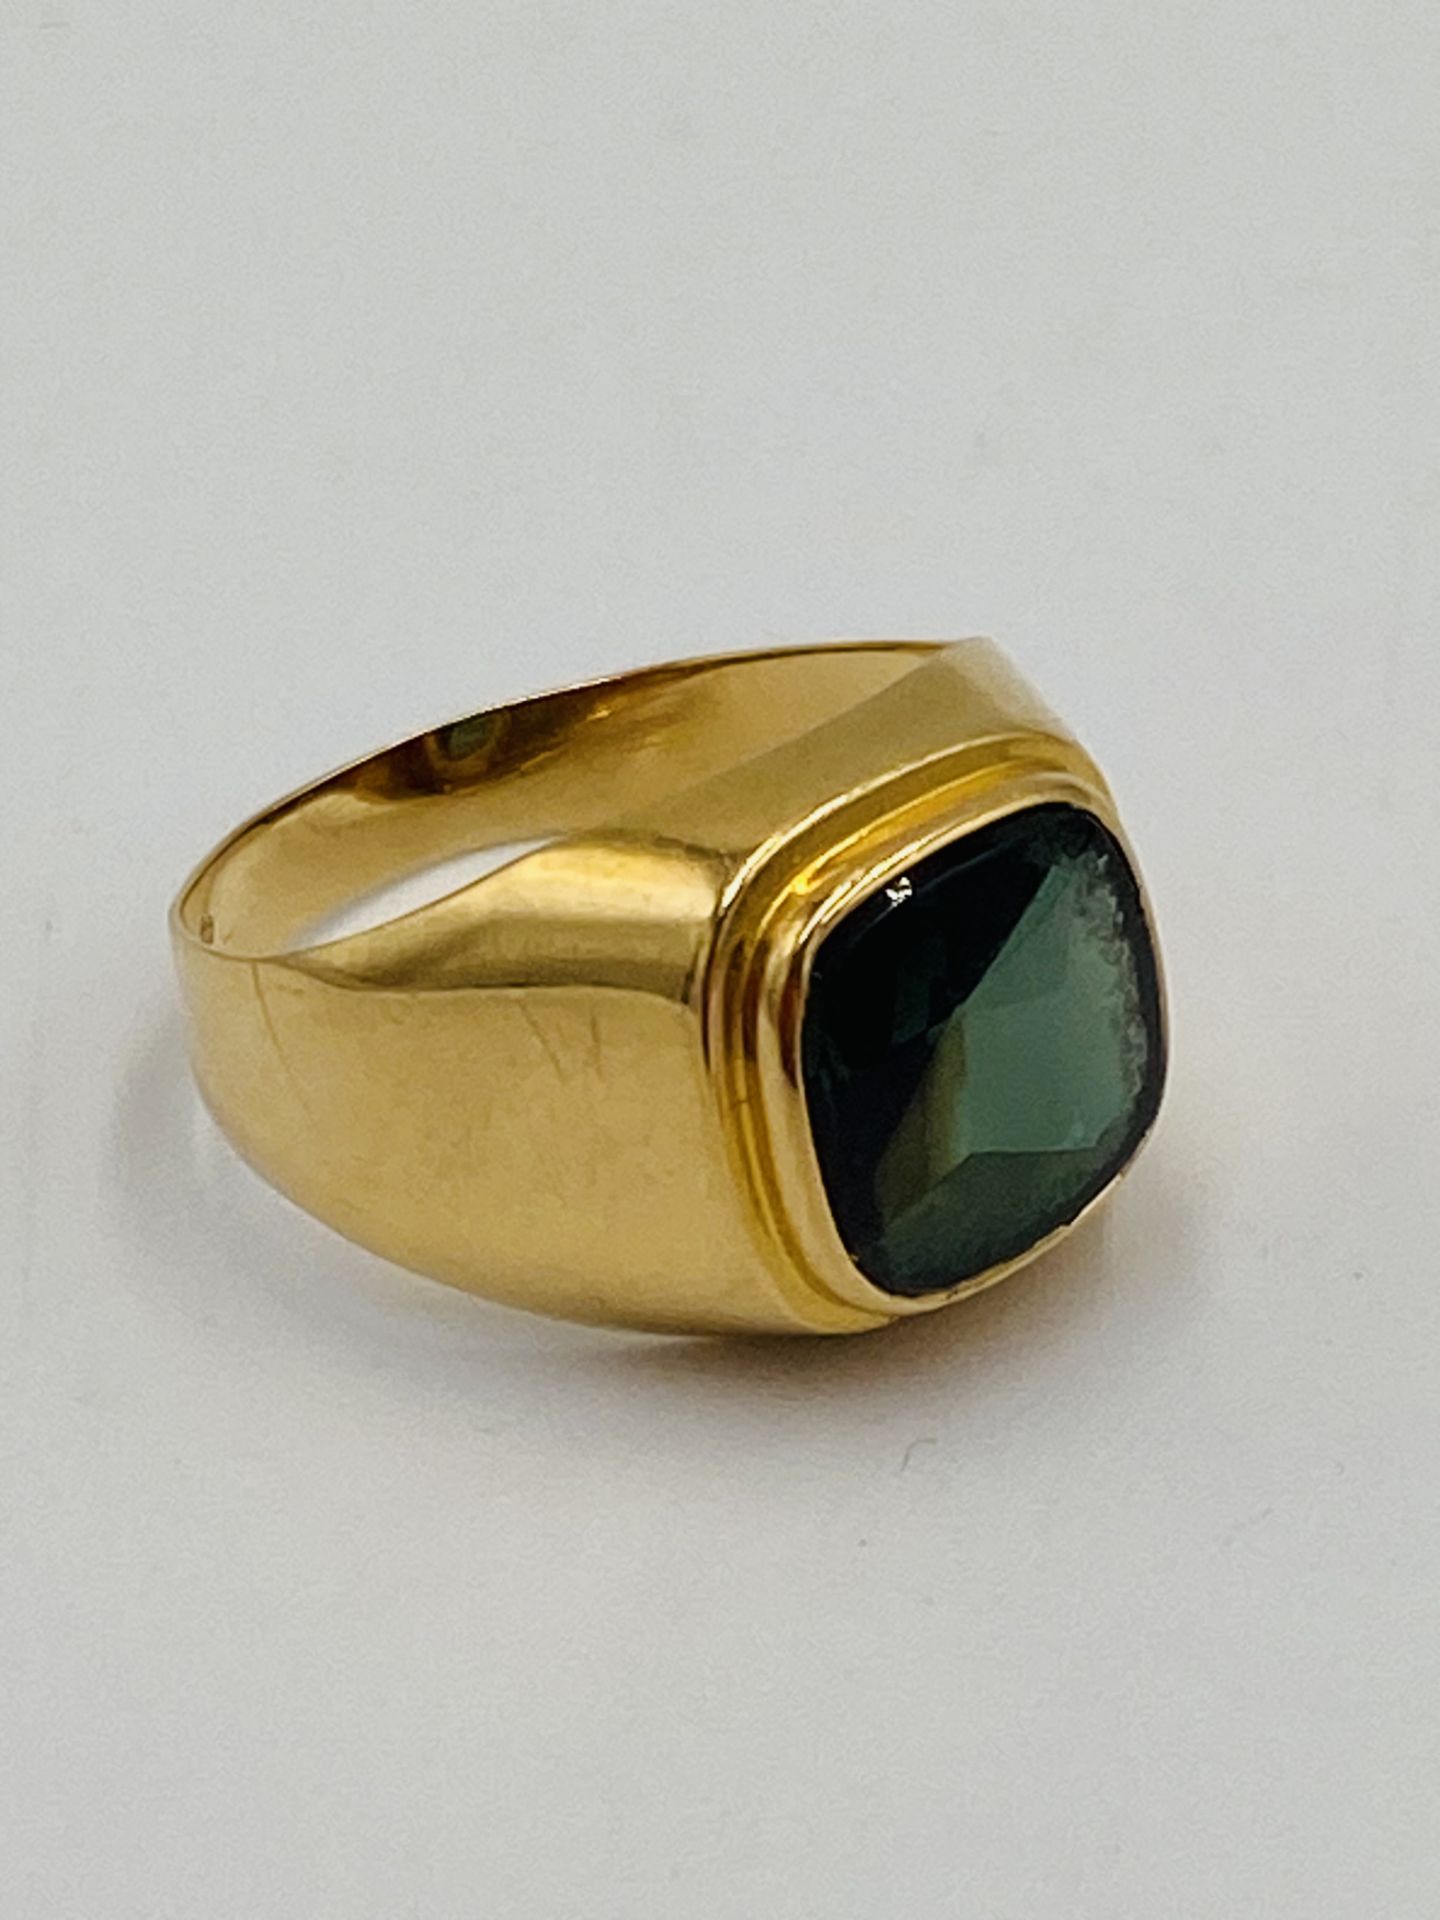 18ct gold signet ring - Image 3 of 5